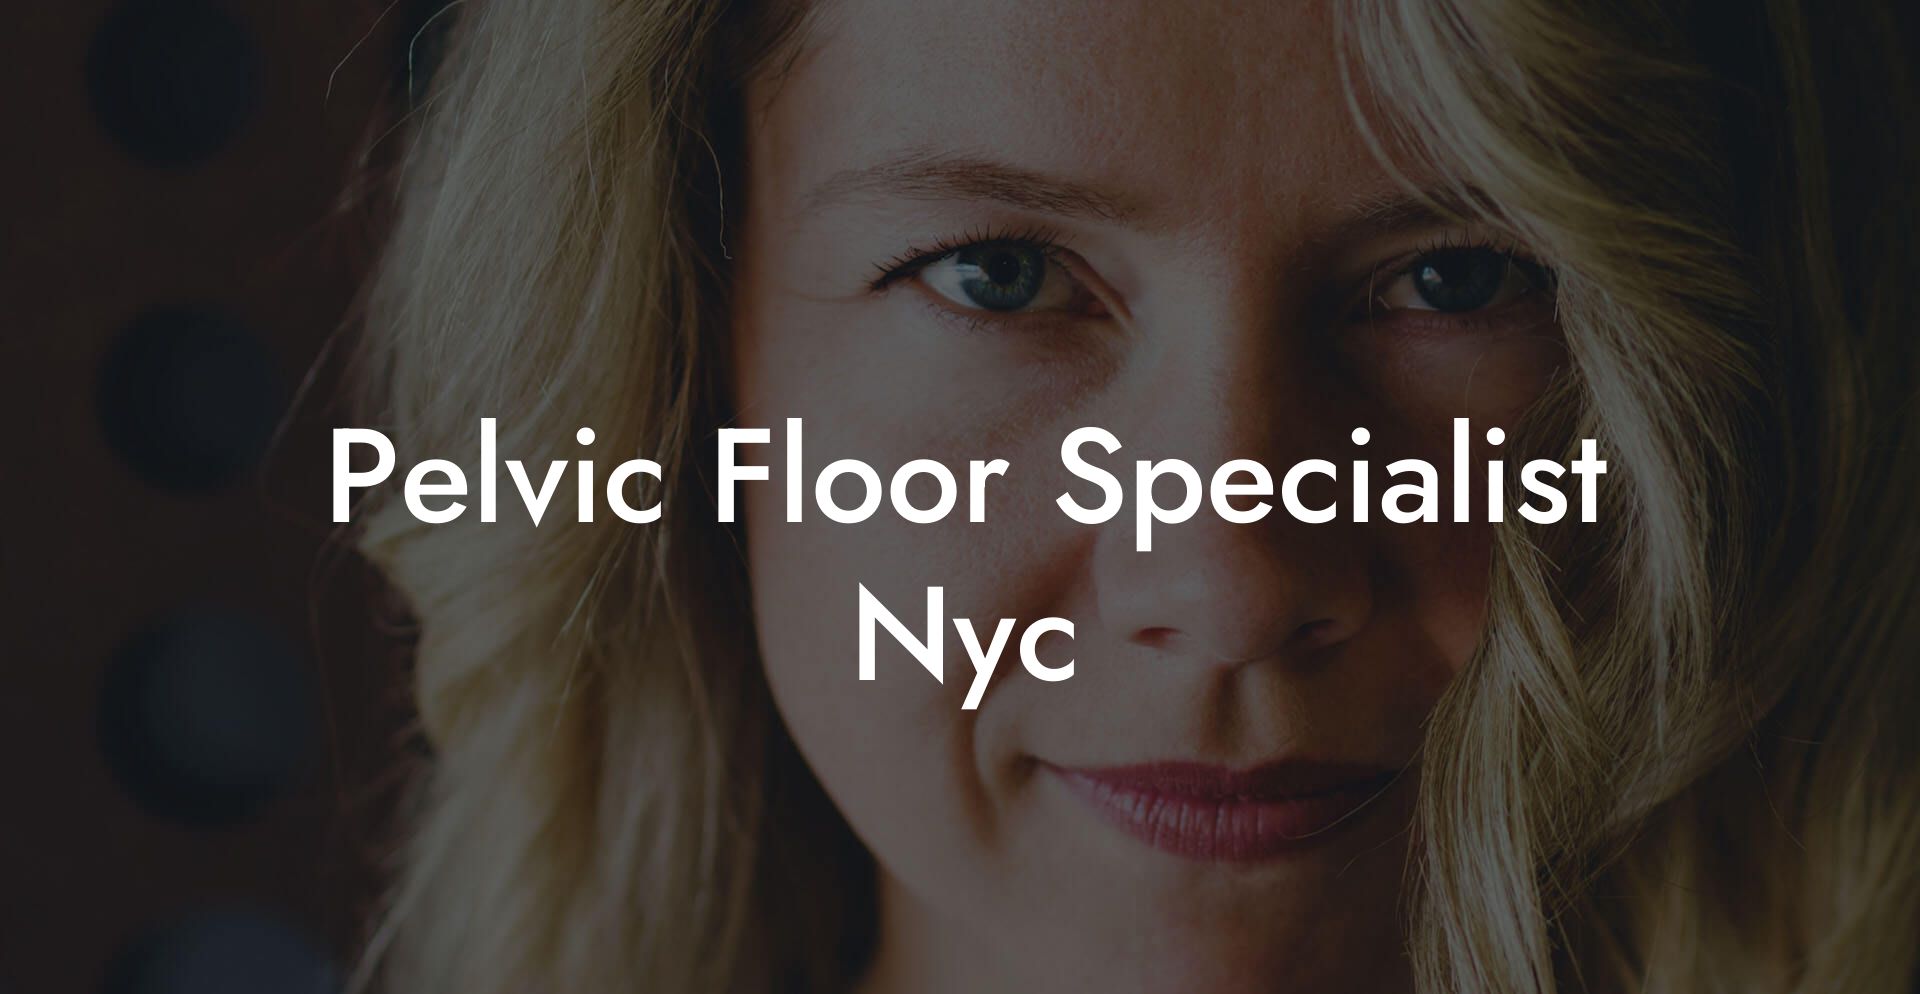 Pelvic Floor Specialist Nyc